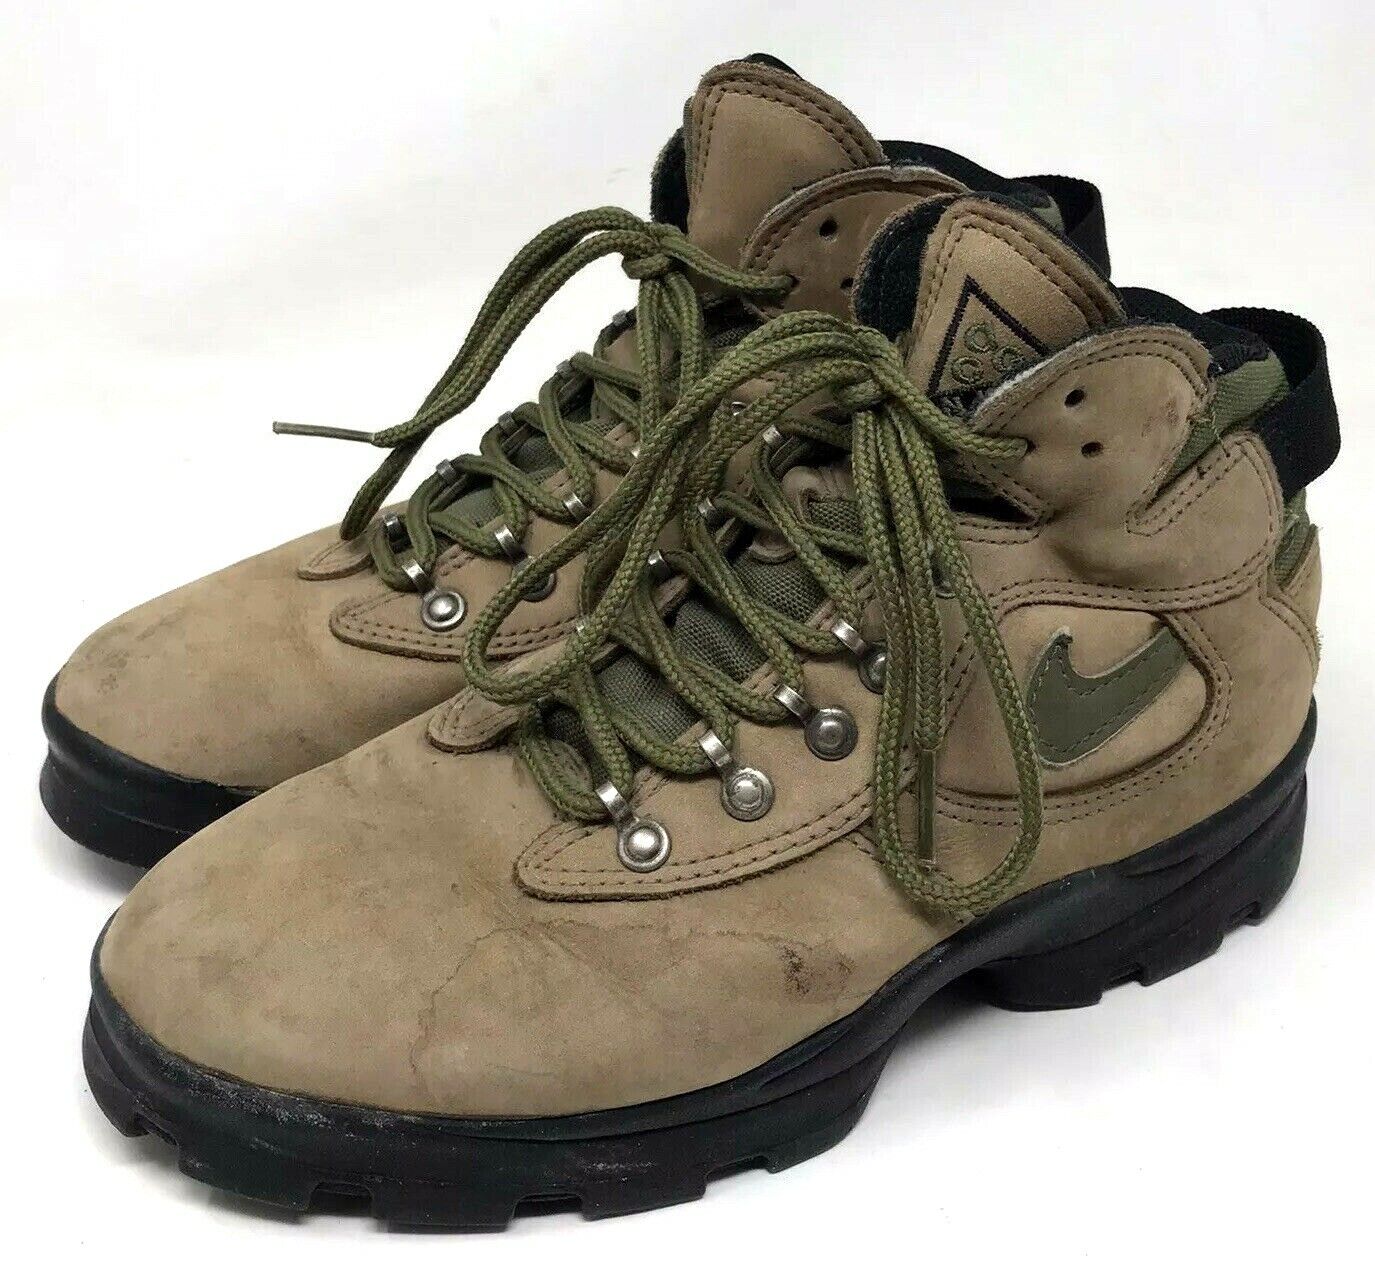 Vintage Nike Air Caldera ACG Leather Hiking Boots Women's